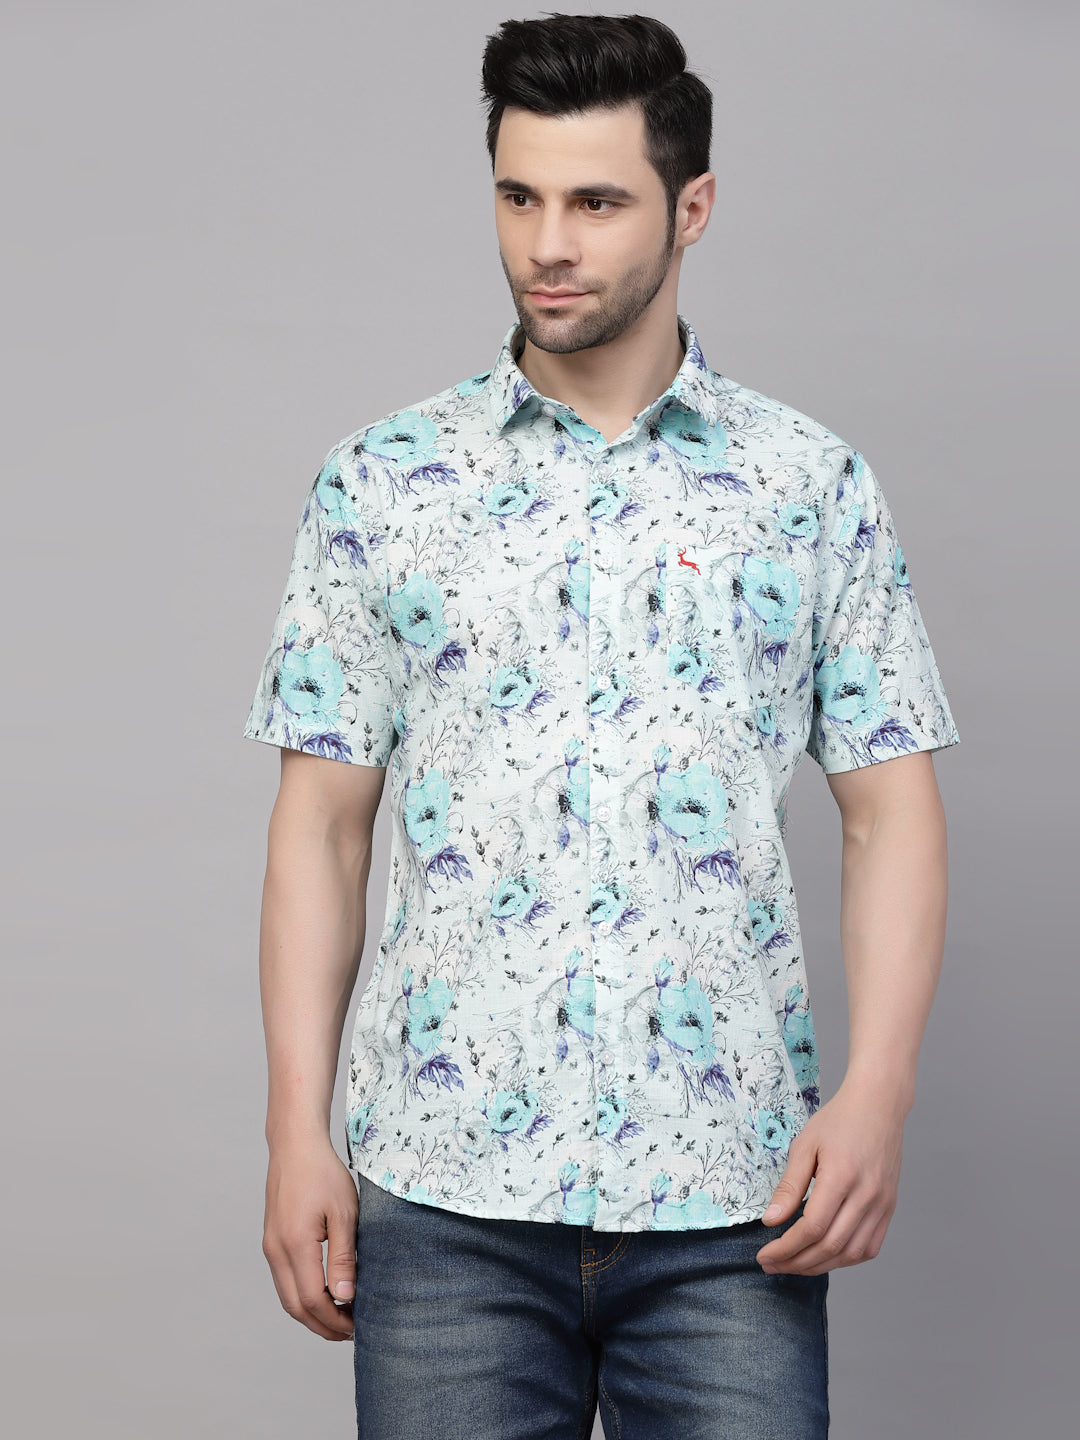 Valbone Men’s Digital Print Blue Regular Fit Casual Shirt Half Sleeves